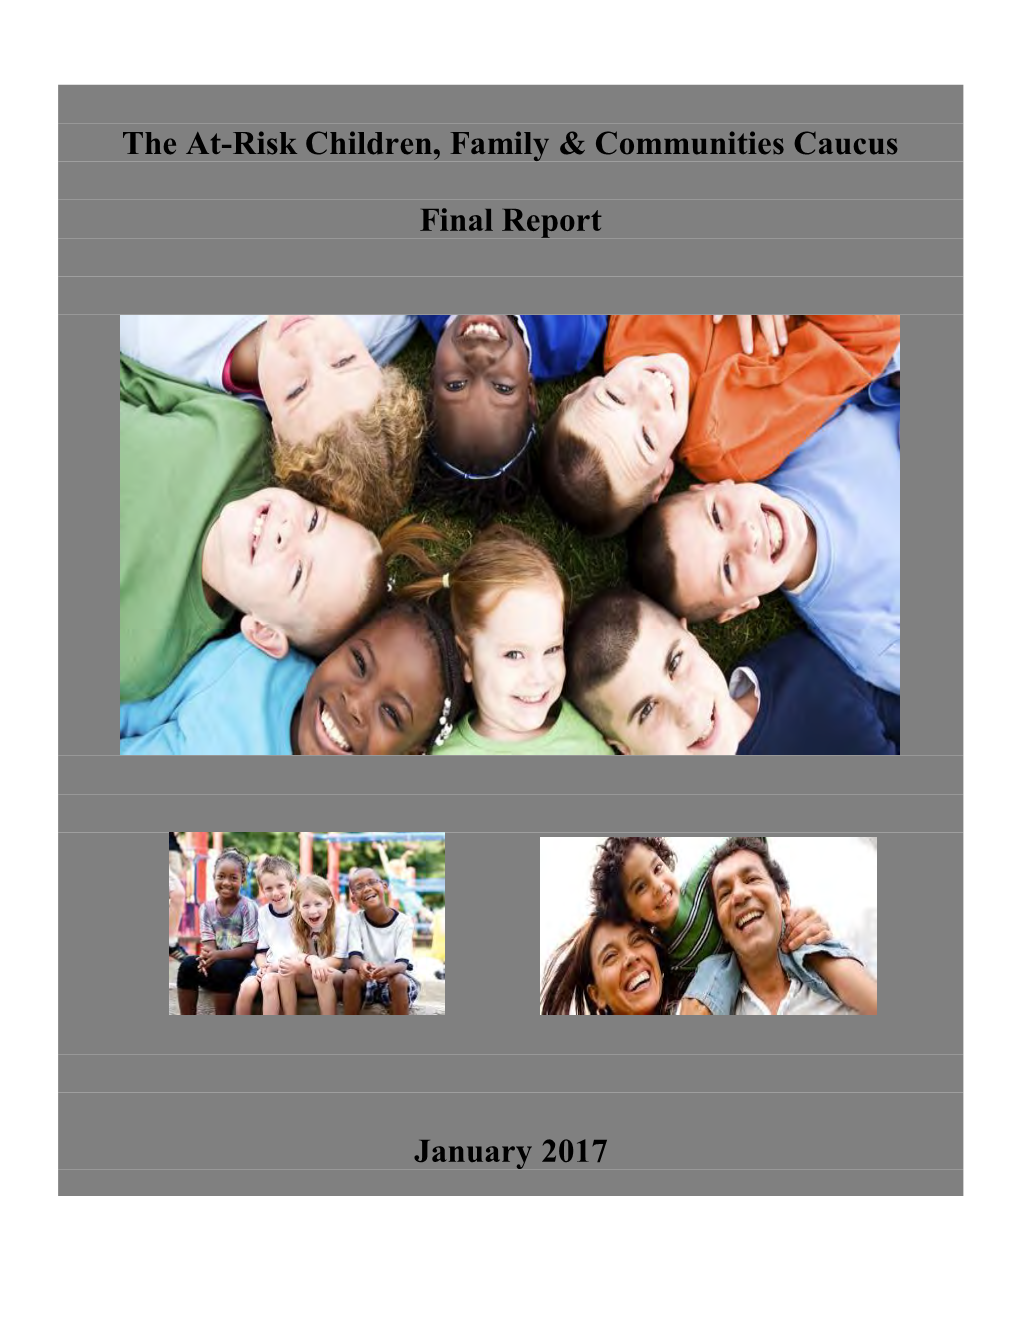 The At-Risk Children, Family & Communities Caucus Final Report